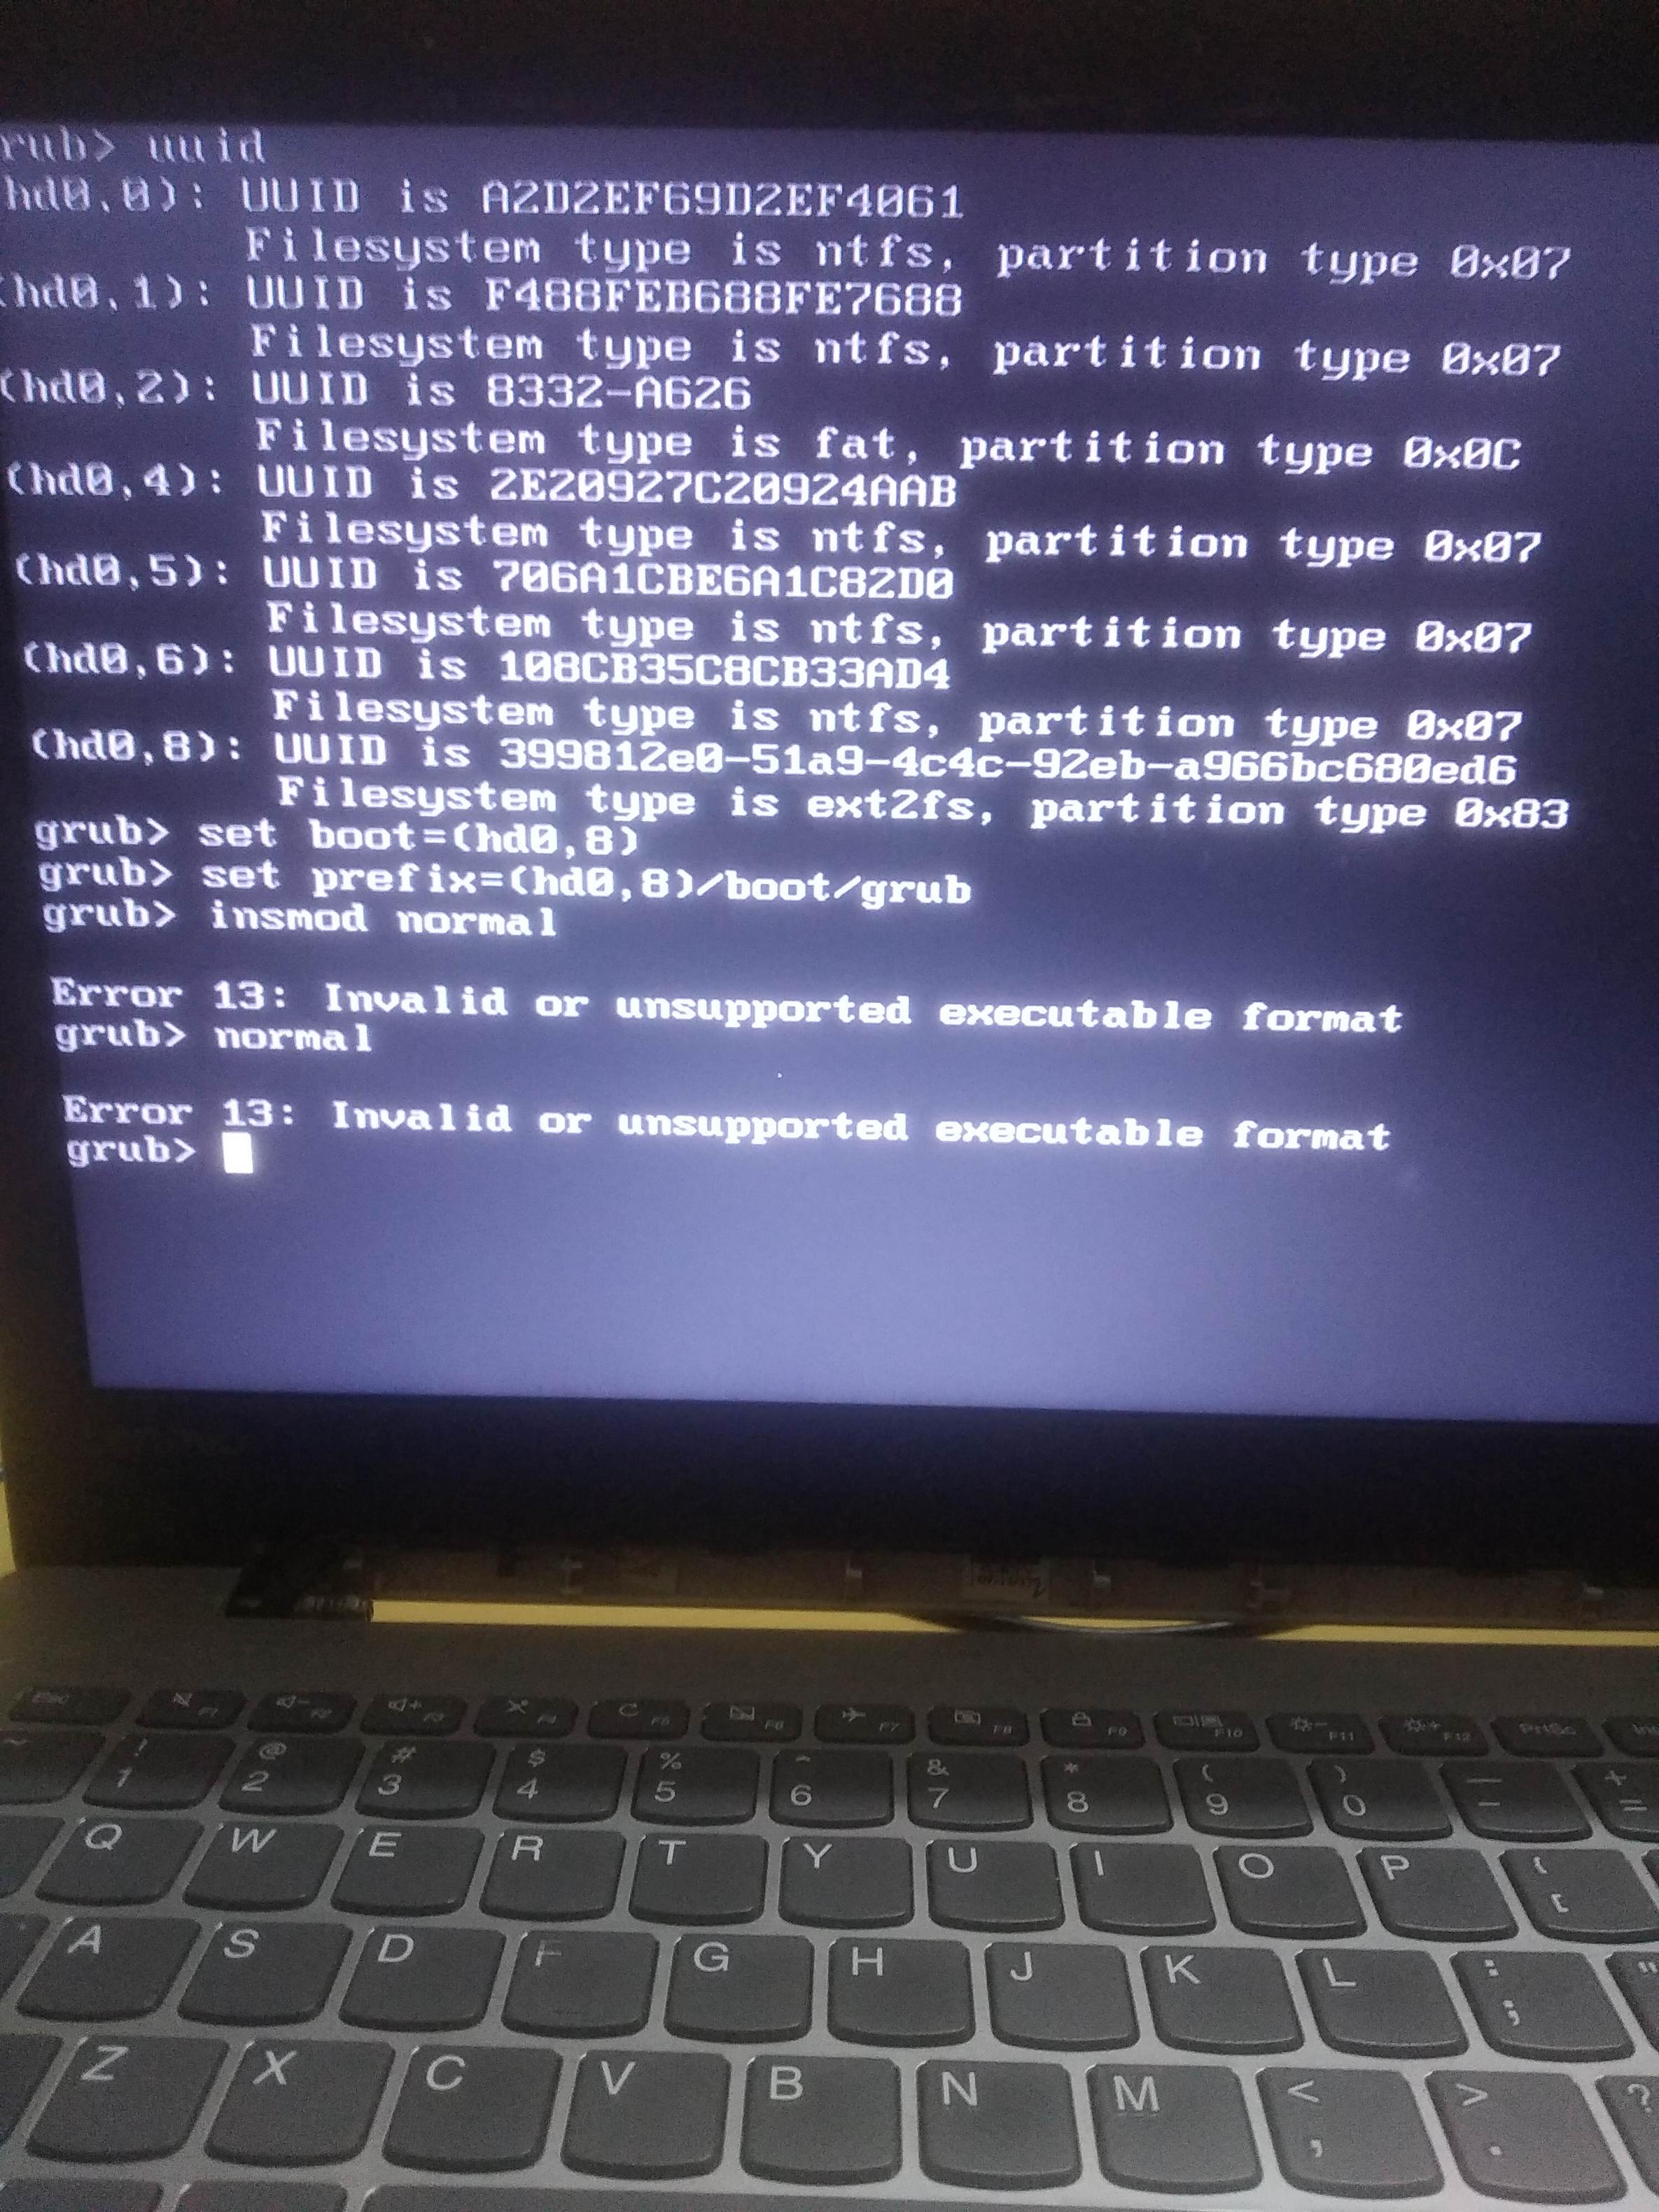 grub error 13 유효하지 않거나 지원되지 않는 실행 가능한 컴퓨터 하드 드라이브 창